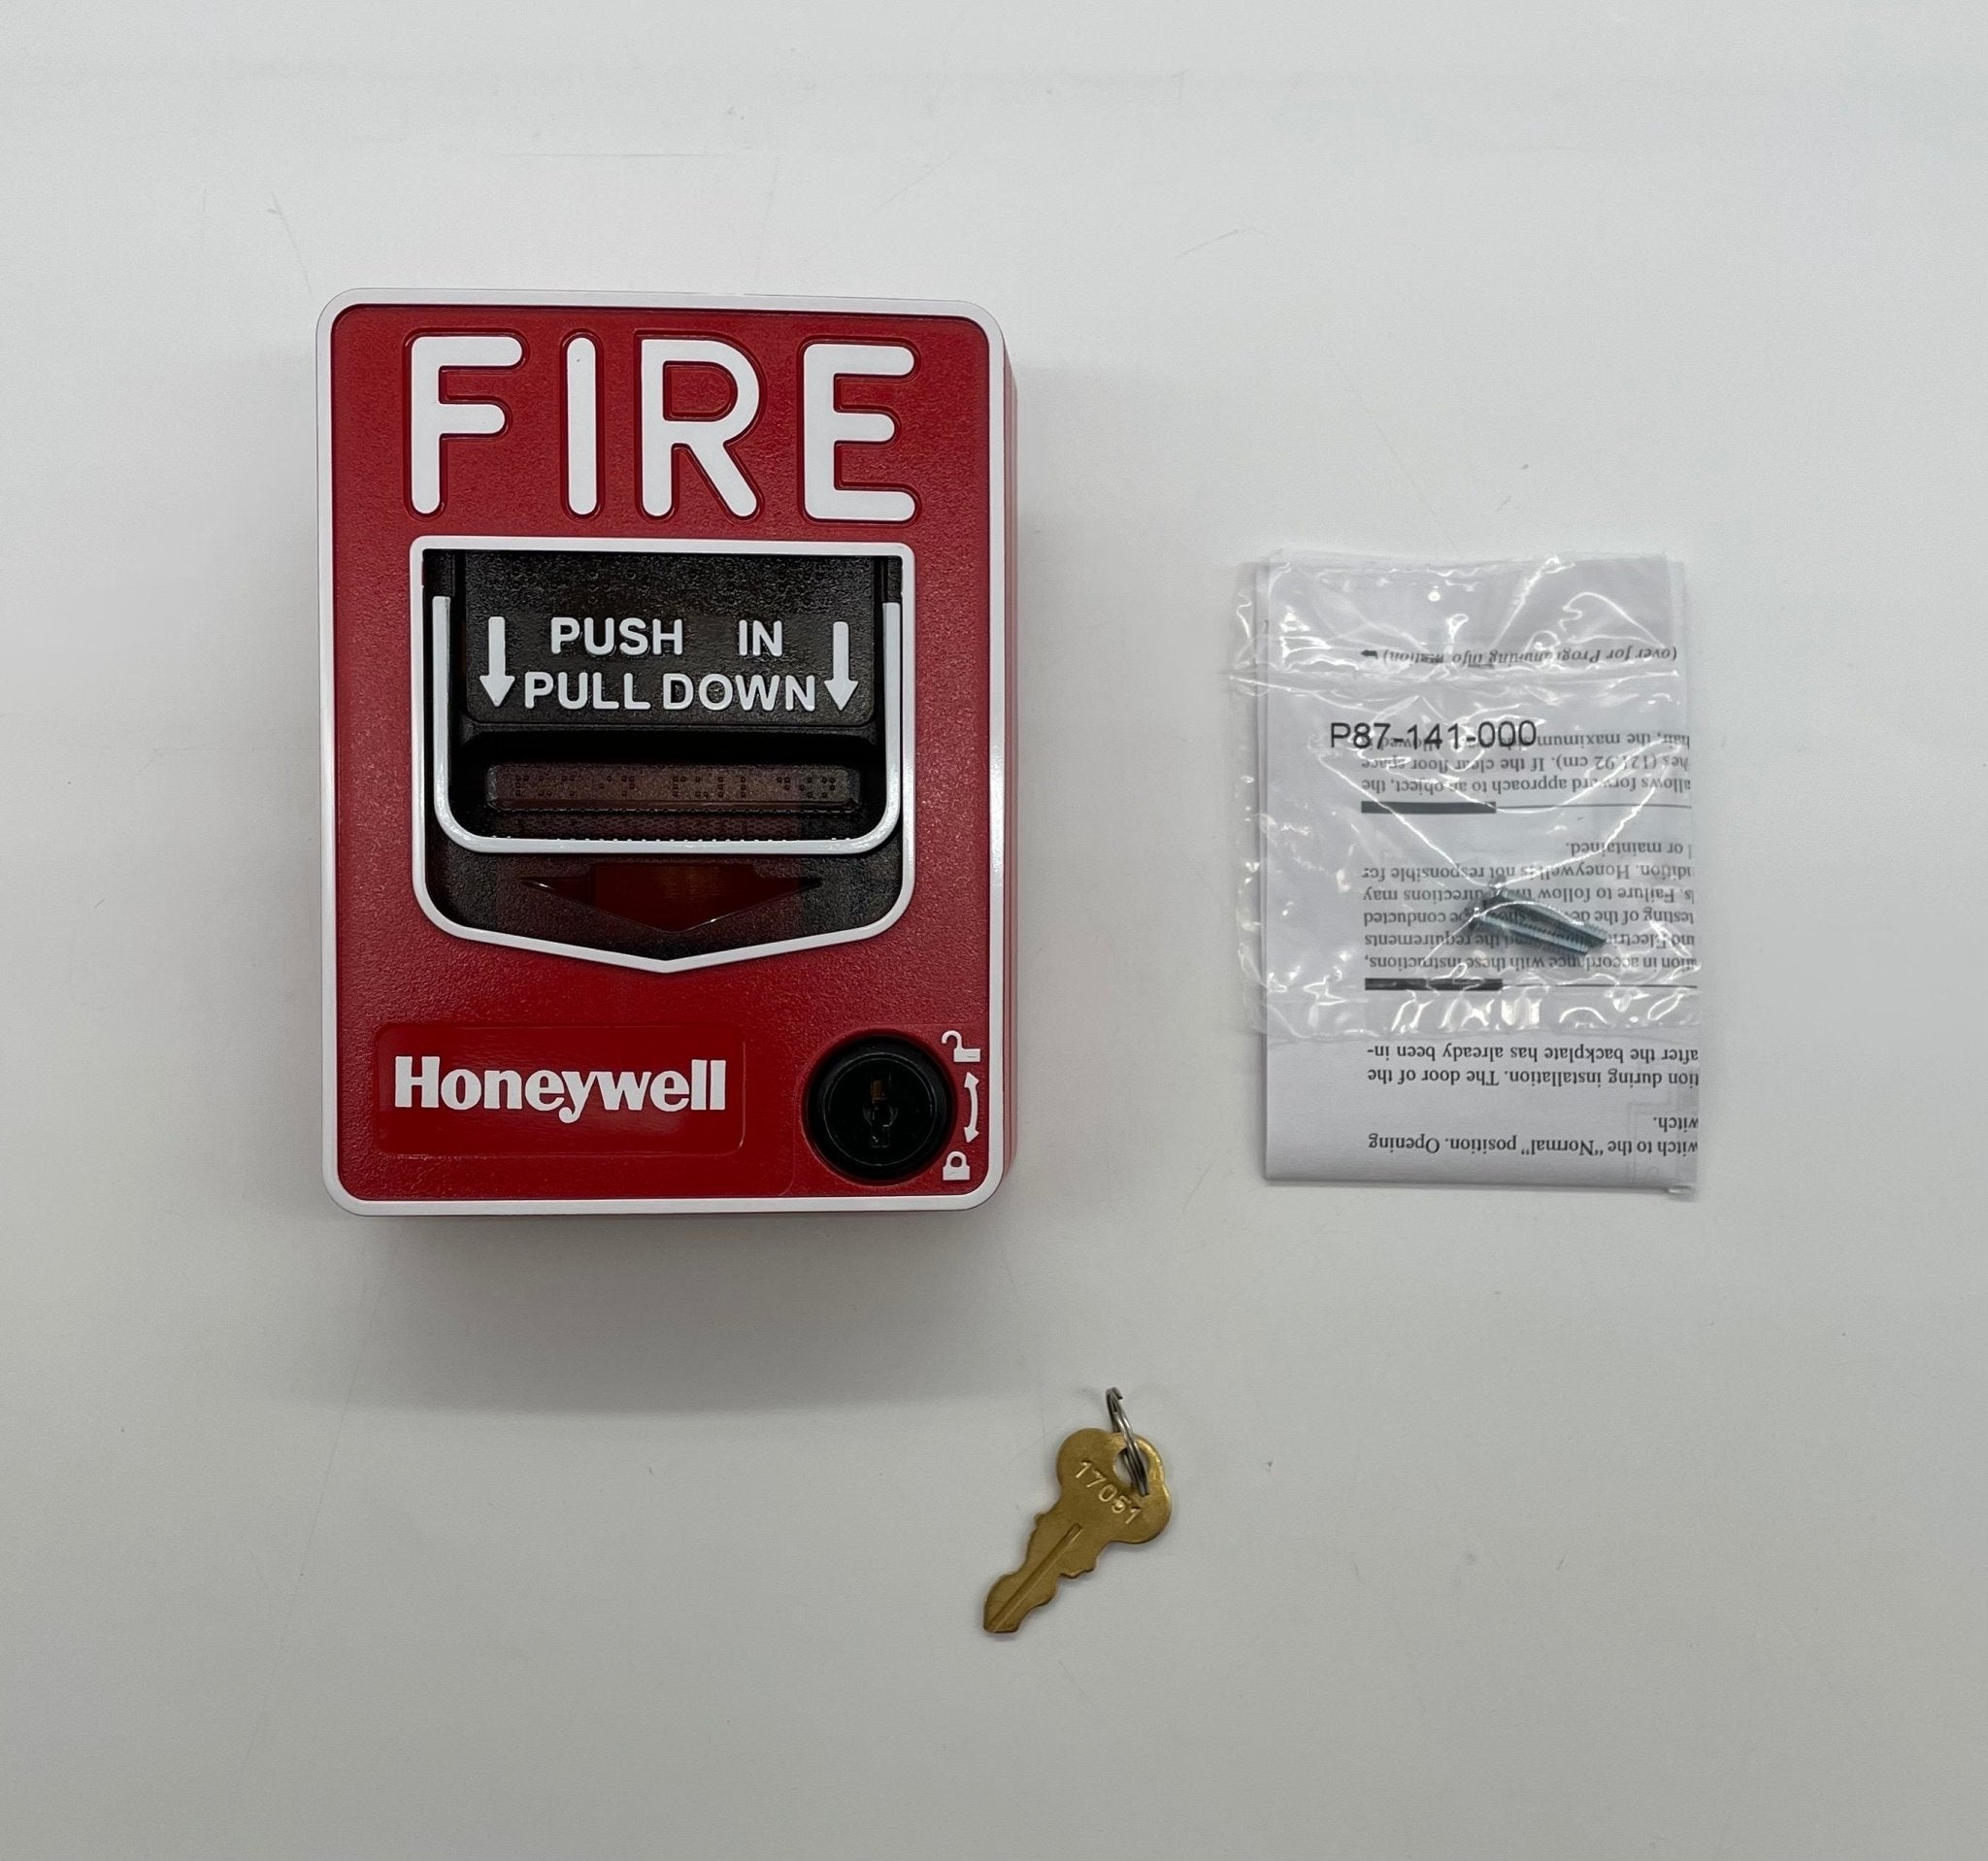 Honeywell S464H1006 - The Fire Alarm Supplier